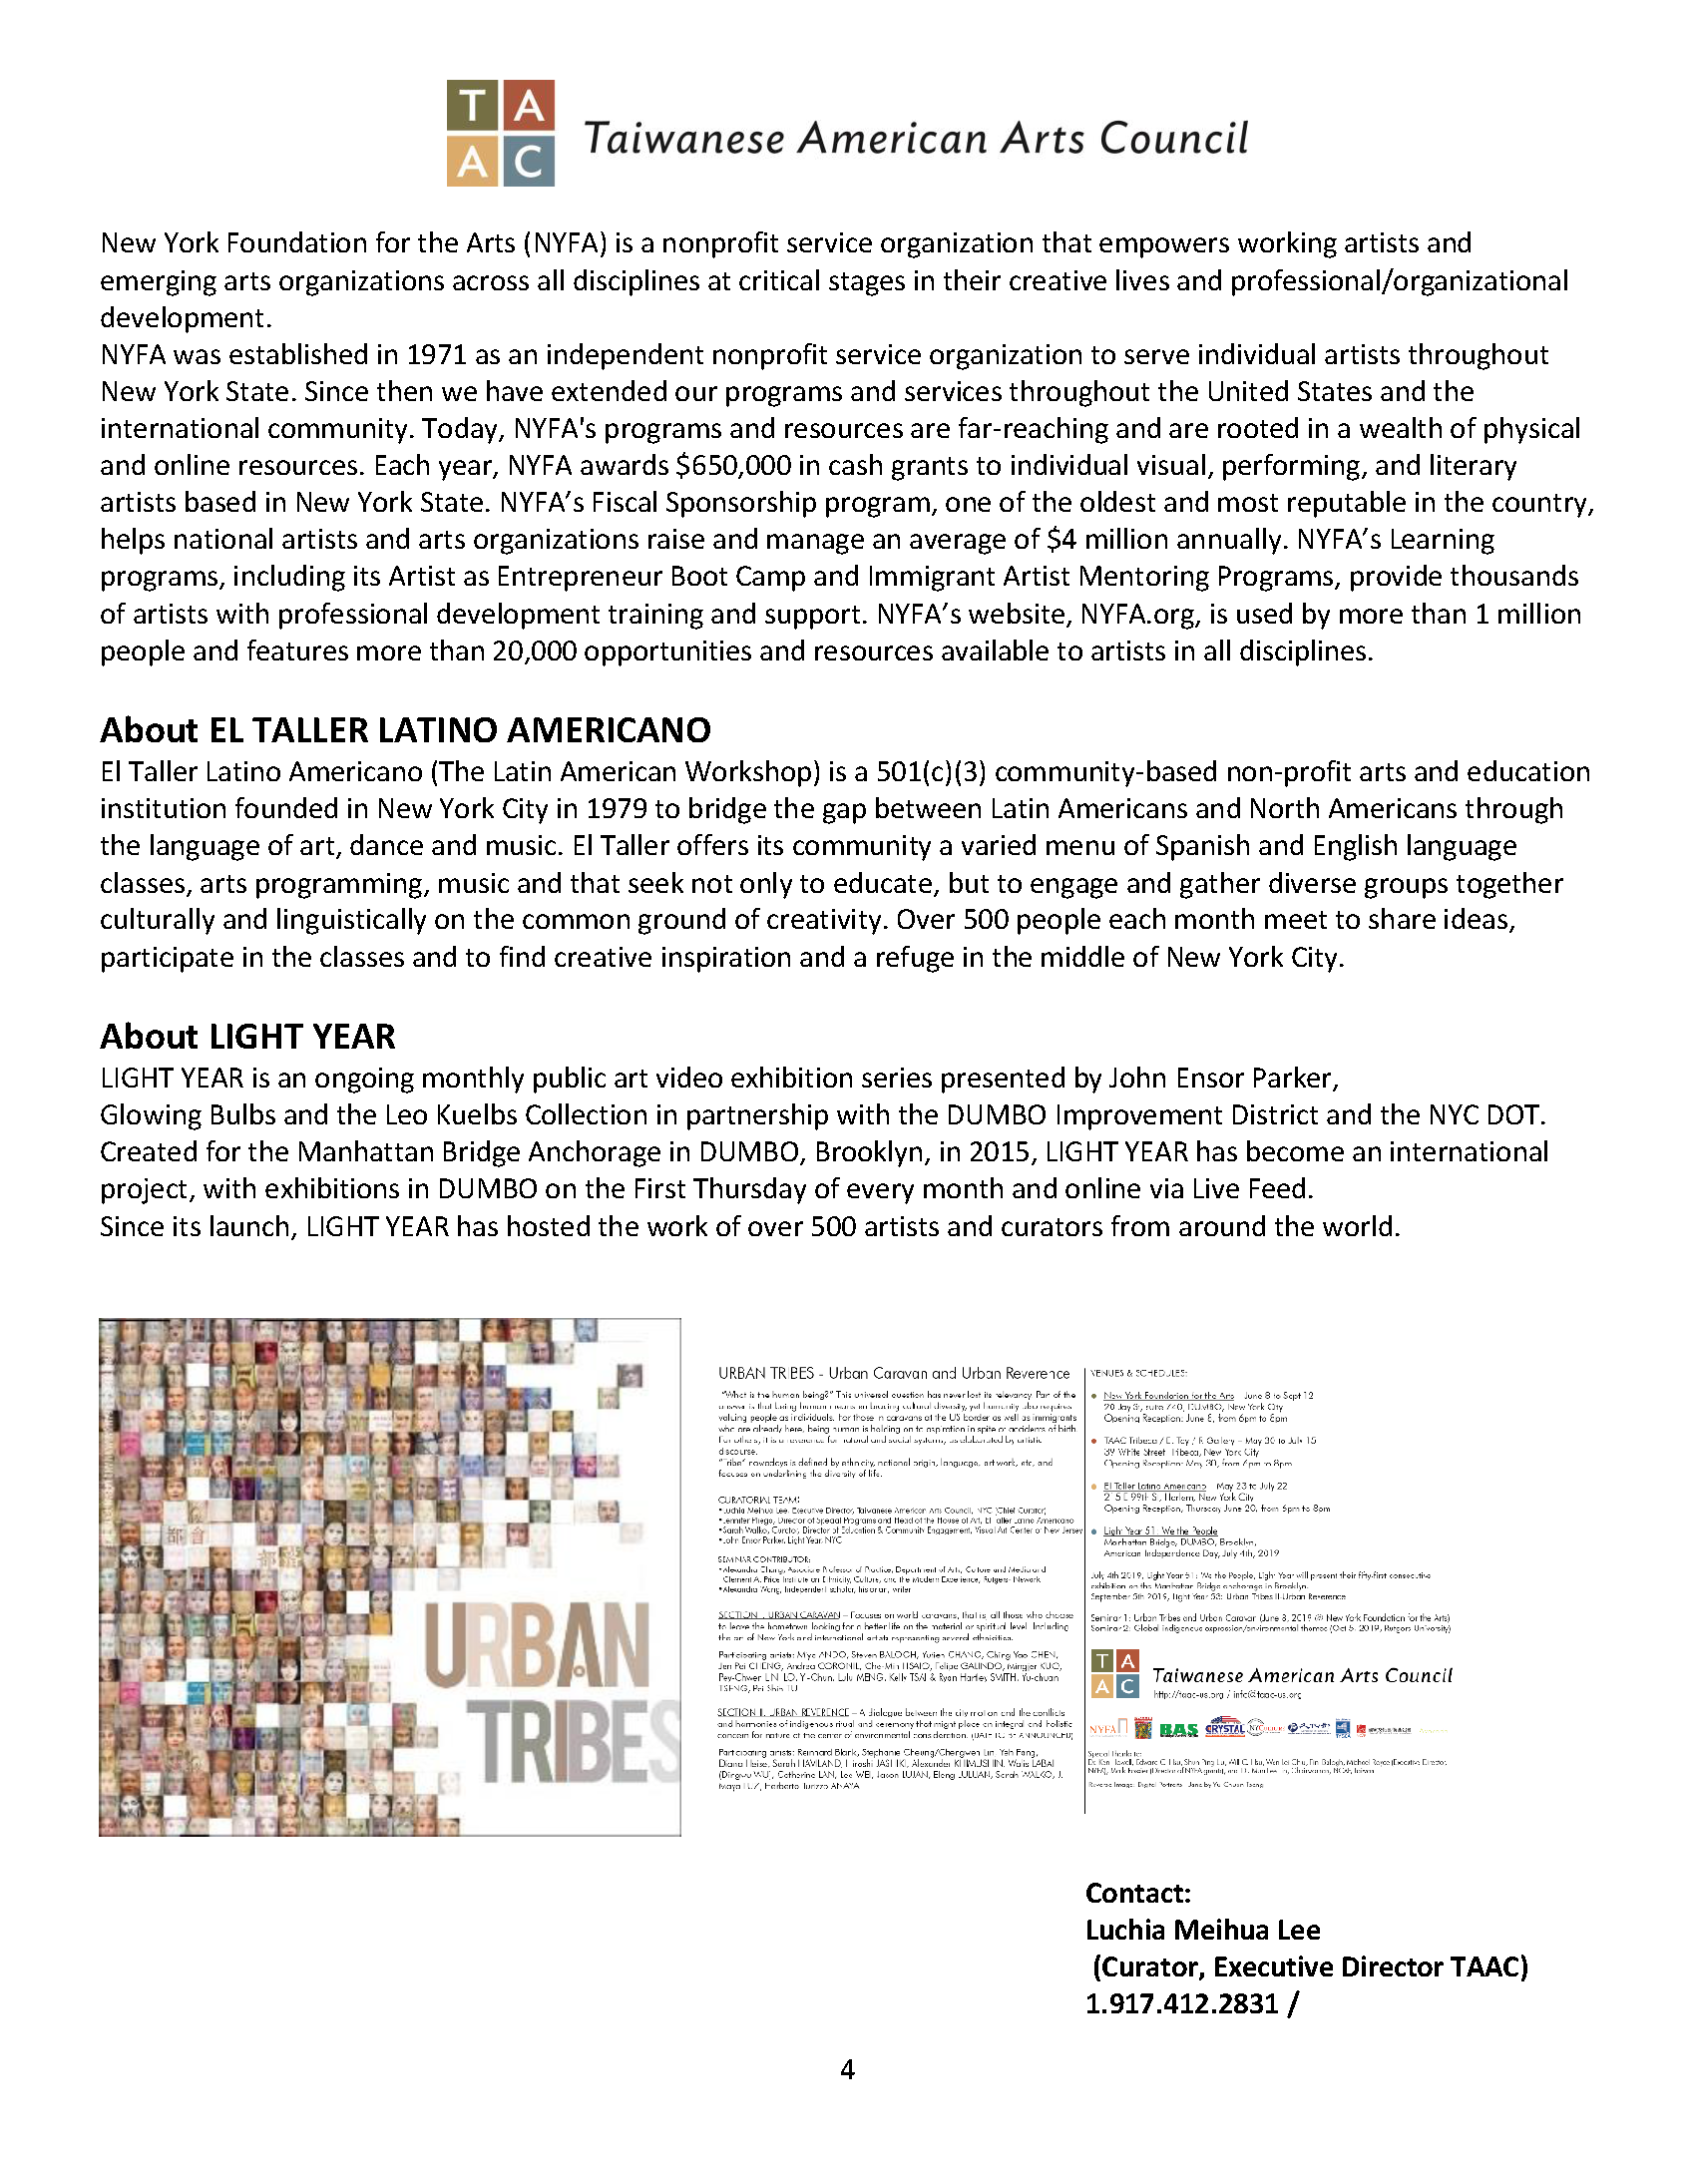 Urban Tribes-El Taller Press Release -EN_Page_4.png